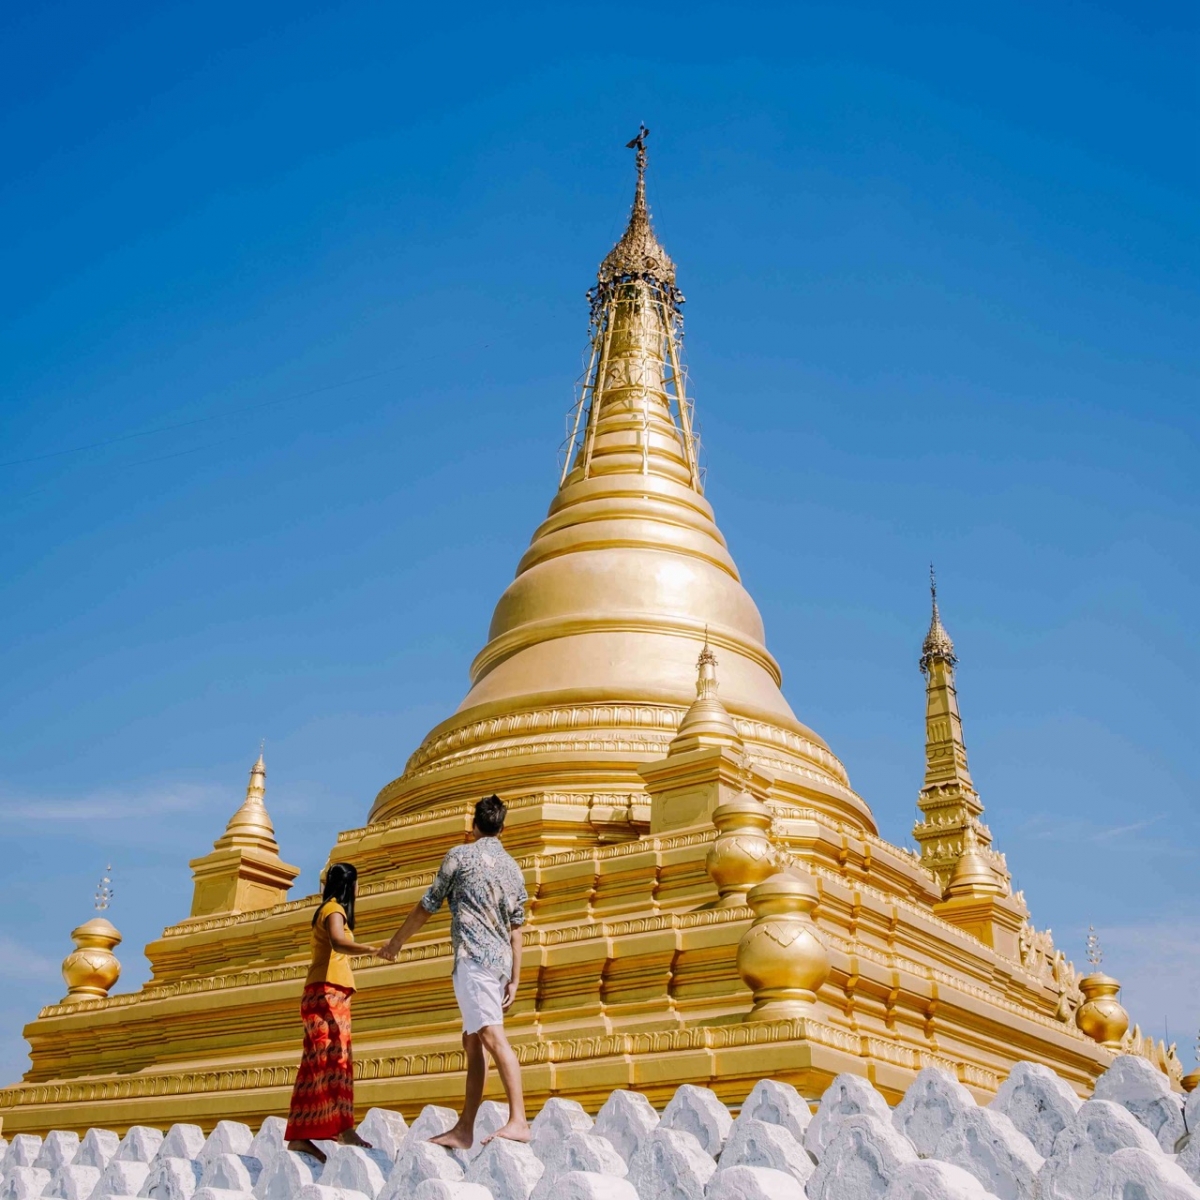 Храм Кутходо в городе Мандалай, Мьянма, Бирма